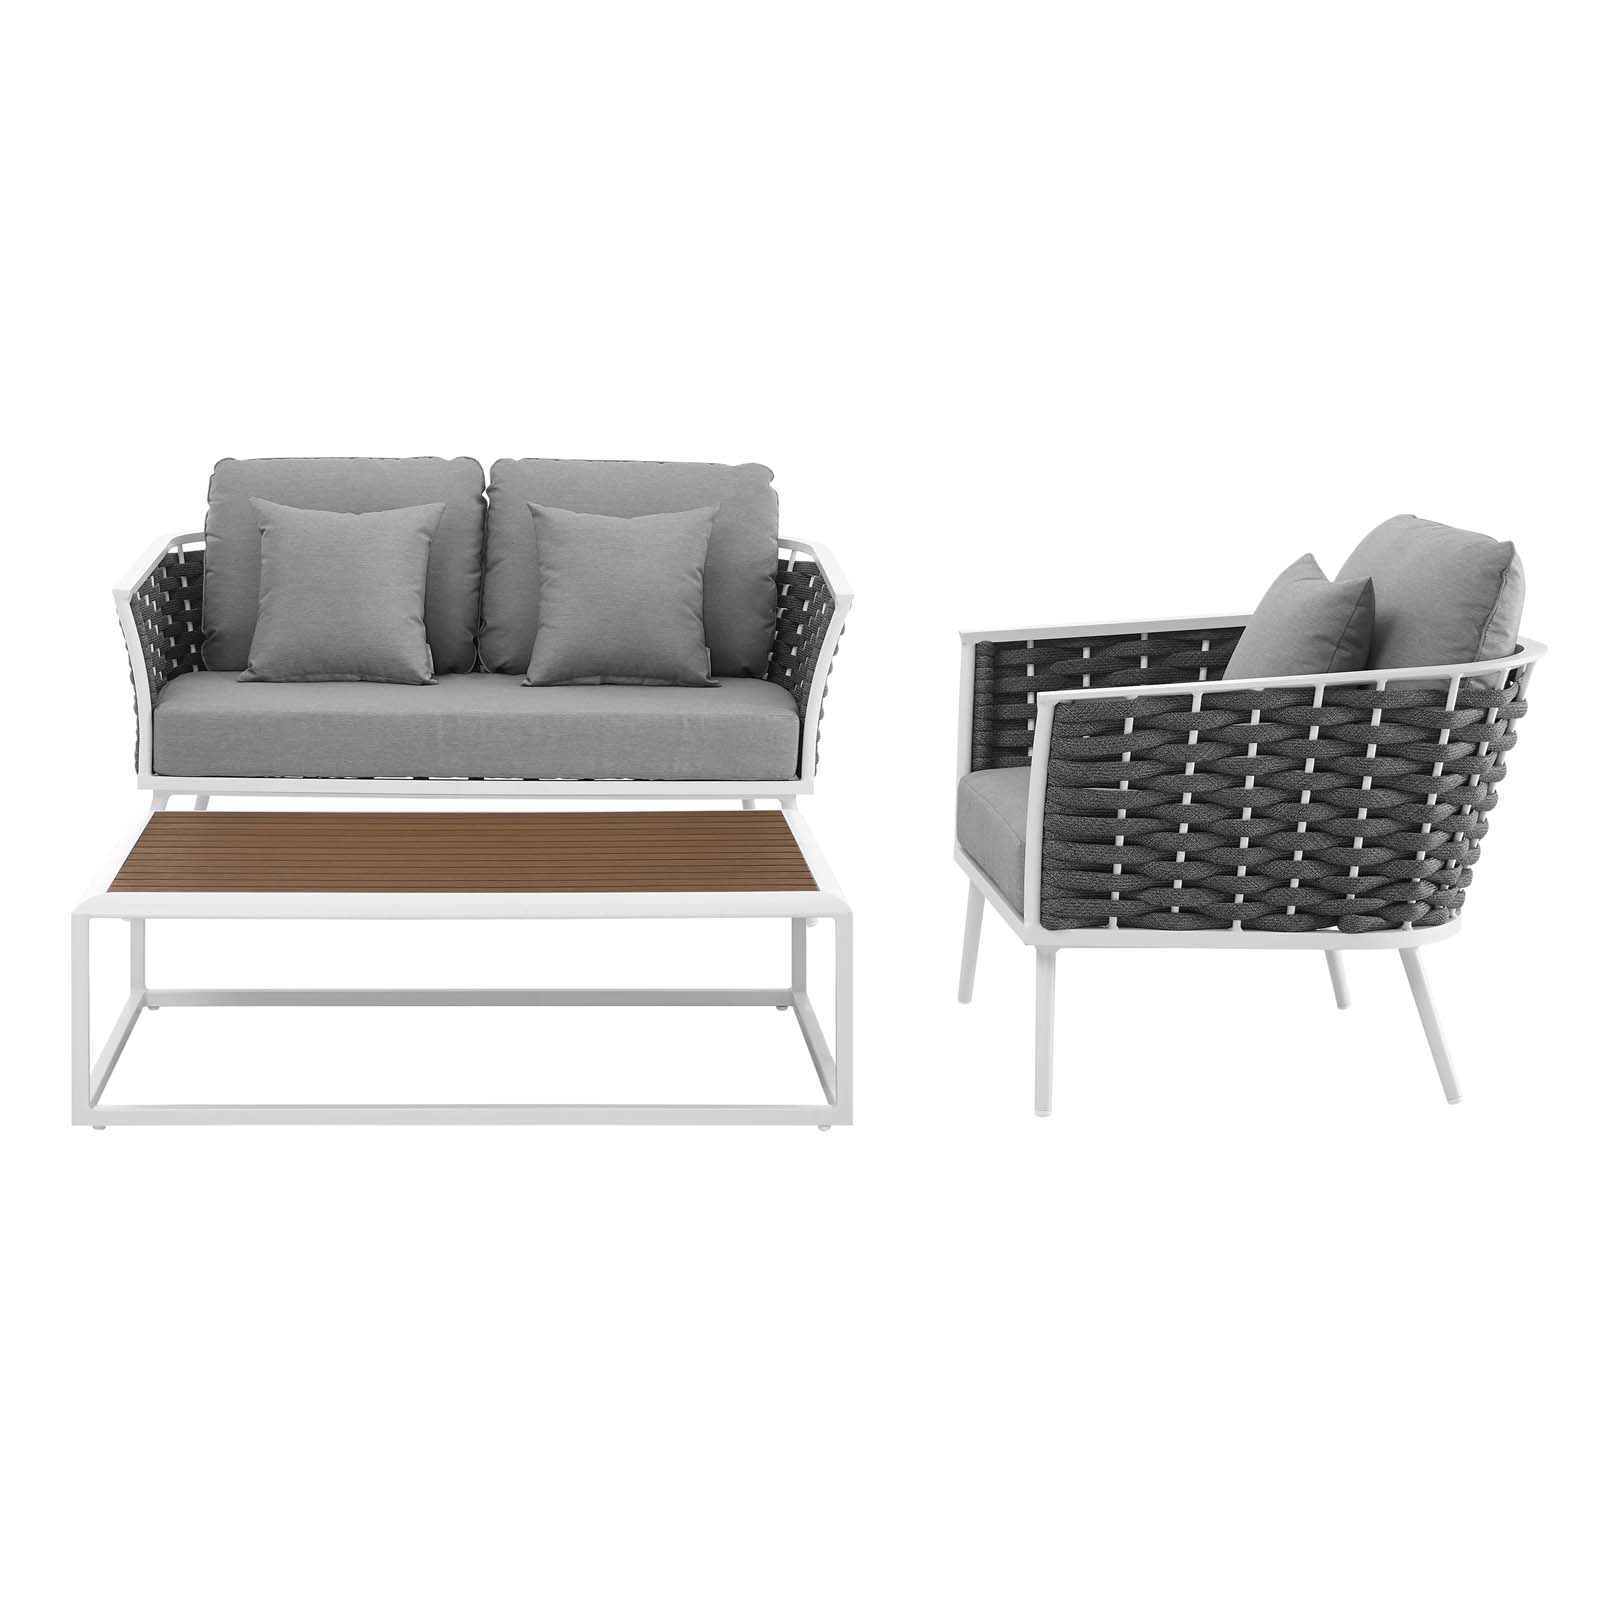 Modern Contemporary Urban Design Outdoor Patio Balcony Garden Furniture Lounge Chair and Sofa Set, Fabric Aluminium, White Grey Gray - image 4 of 8